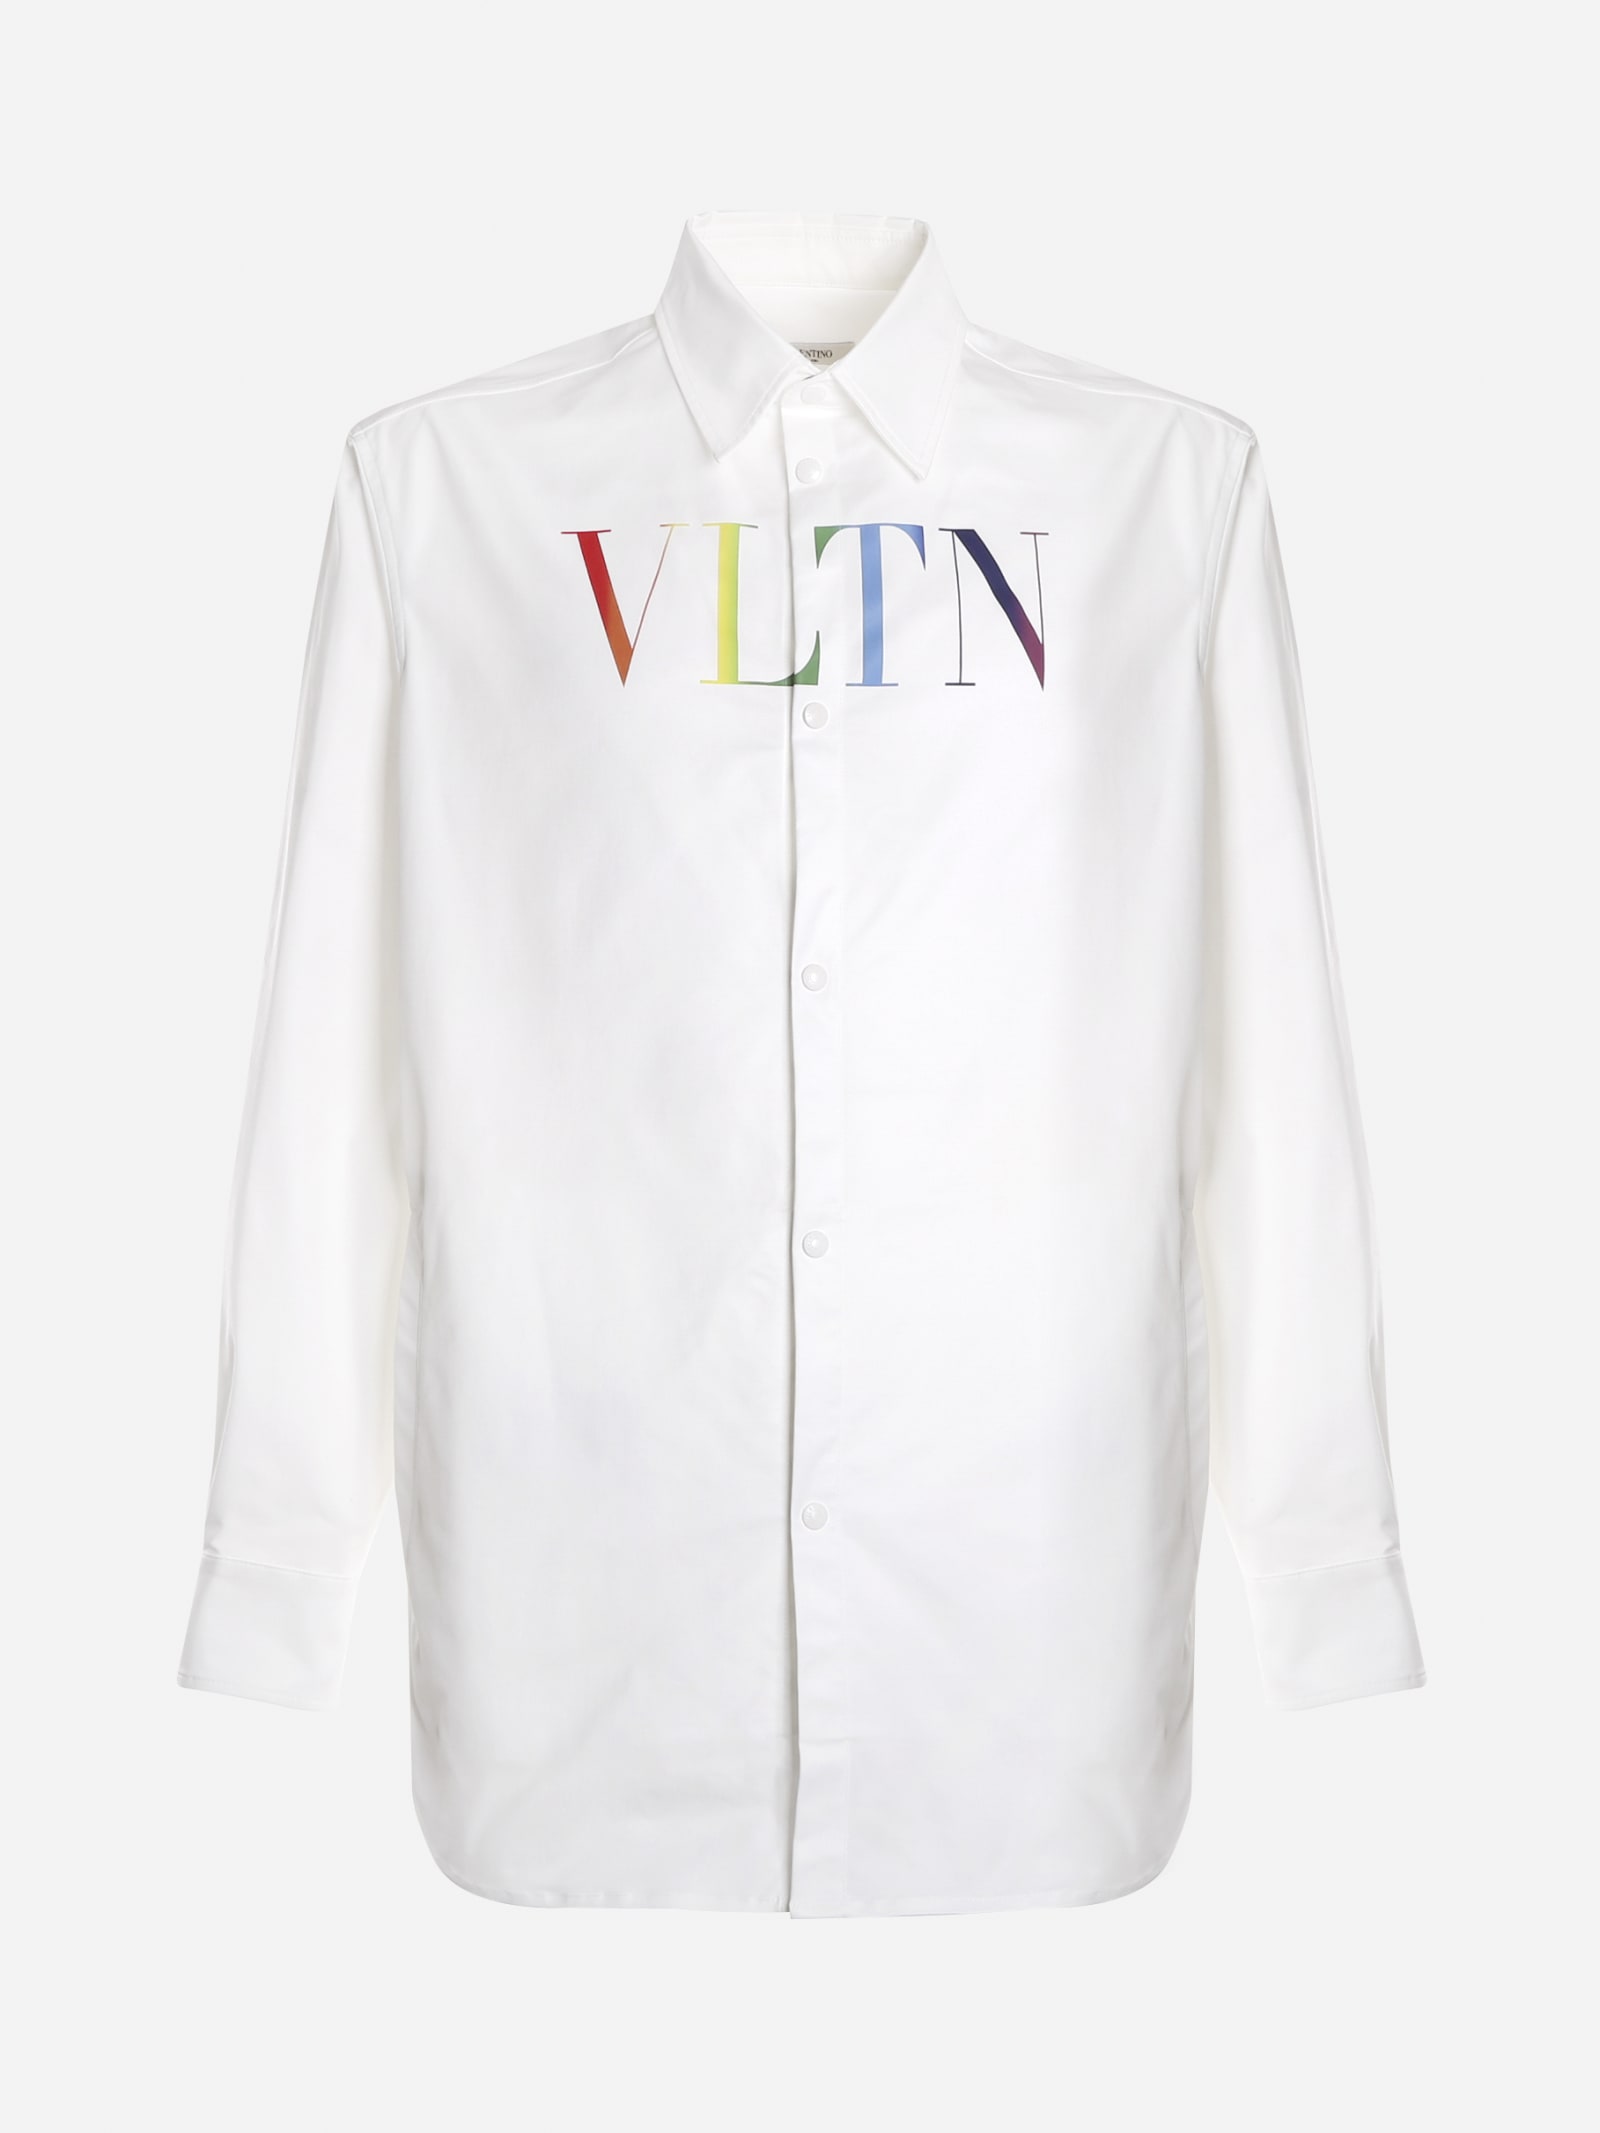 Valentino Cotton Shirt With Multicolor Vltn Print